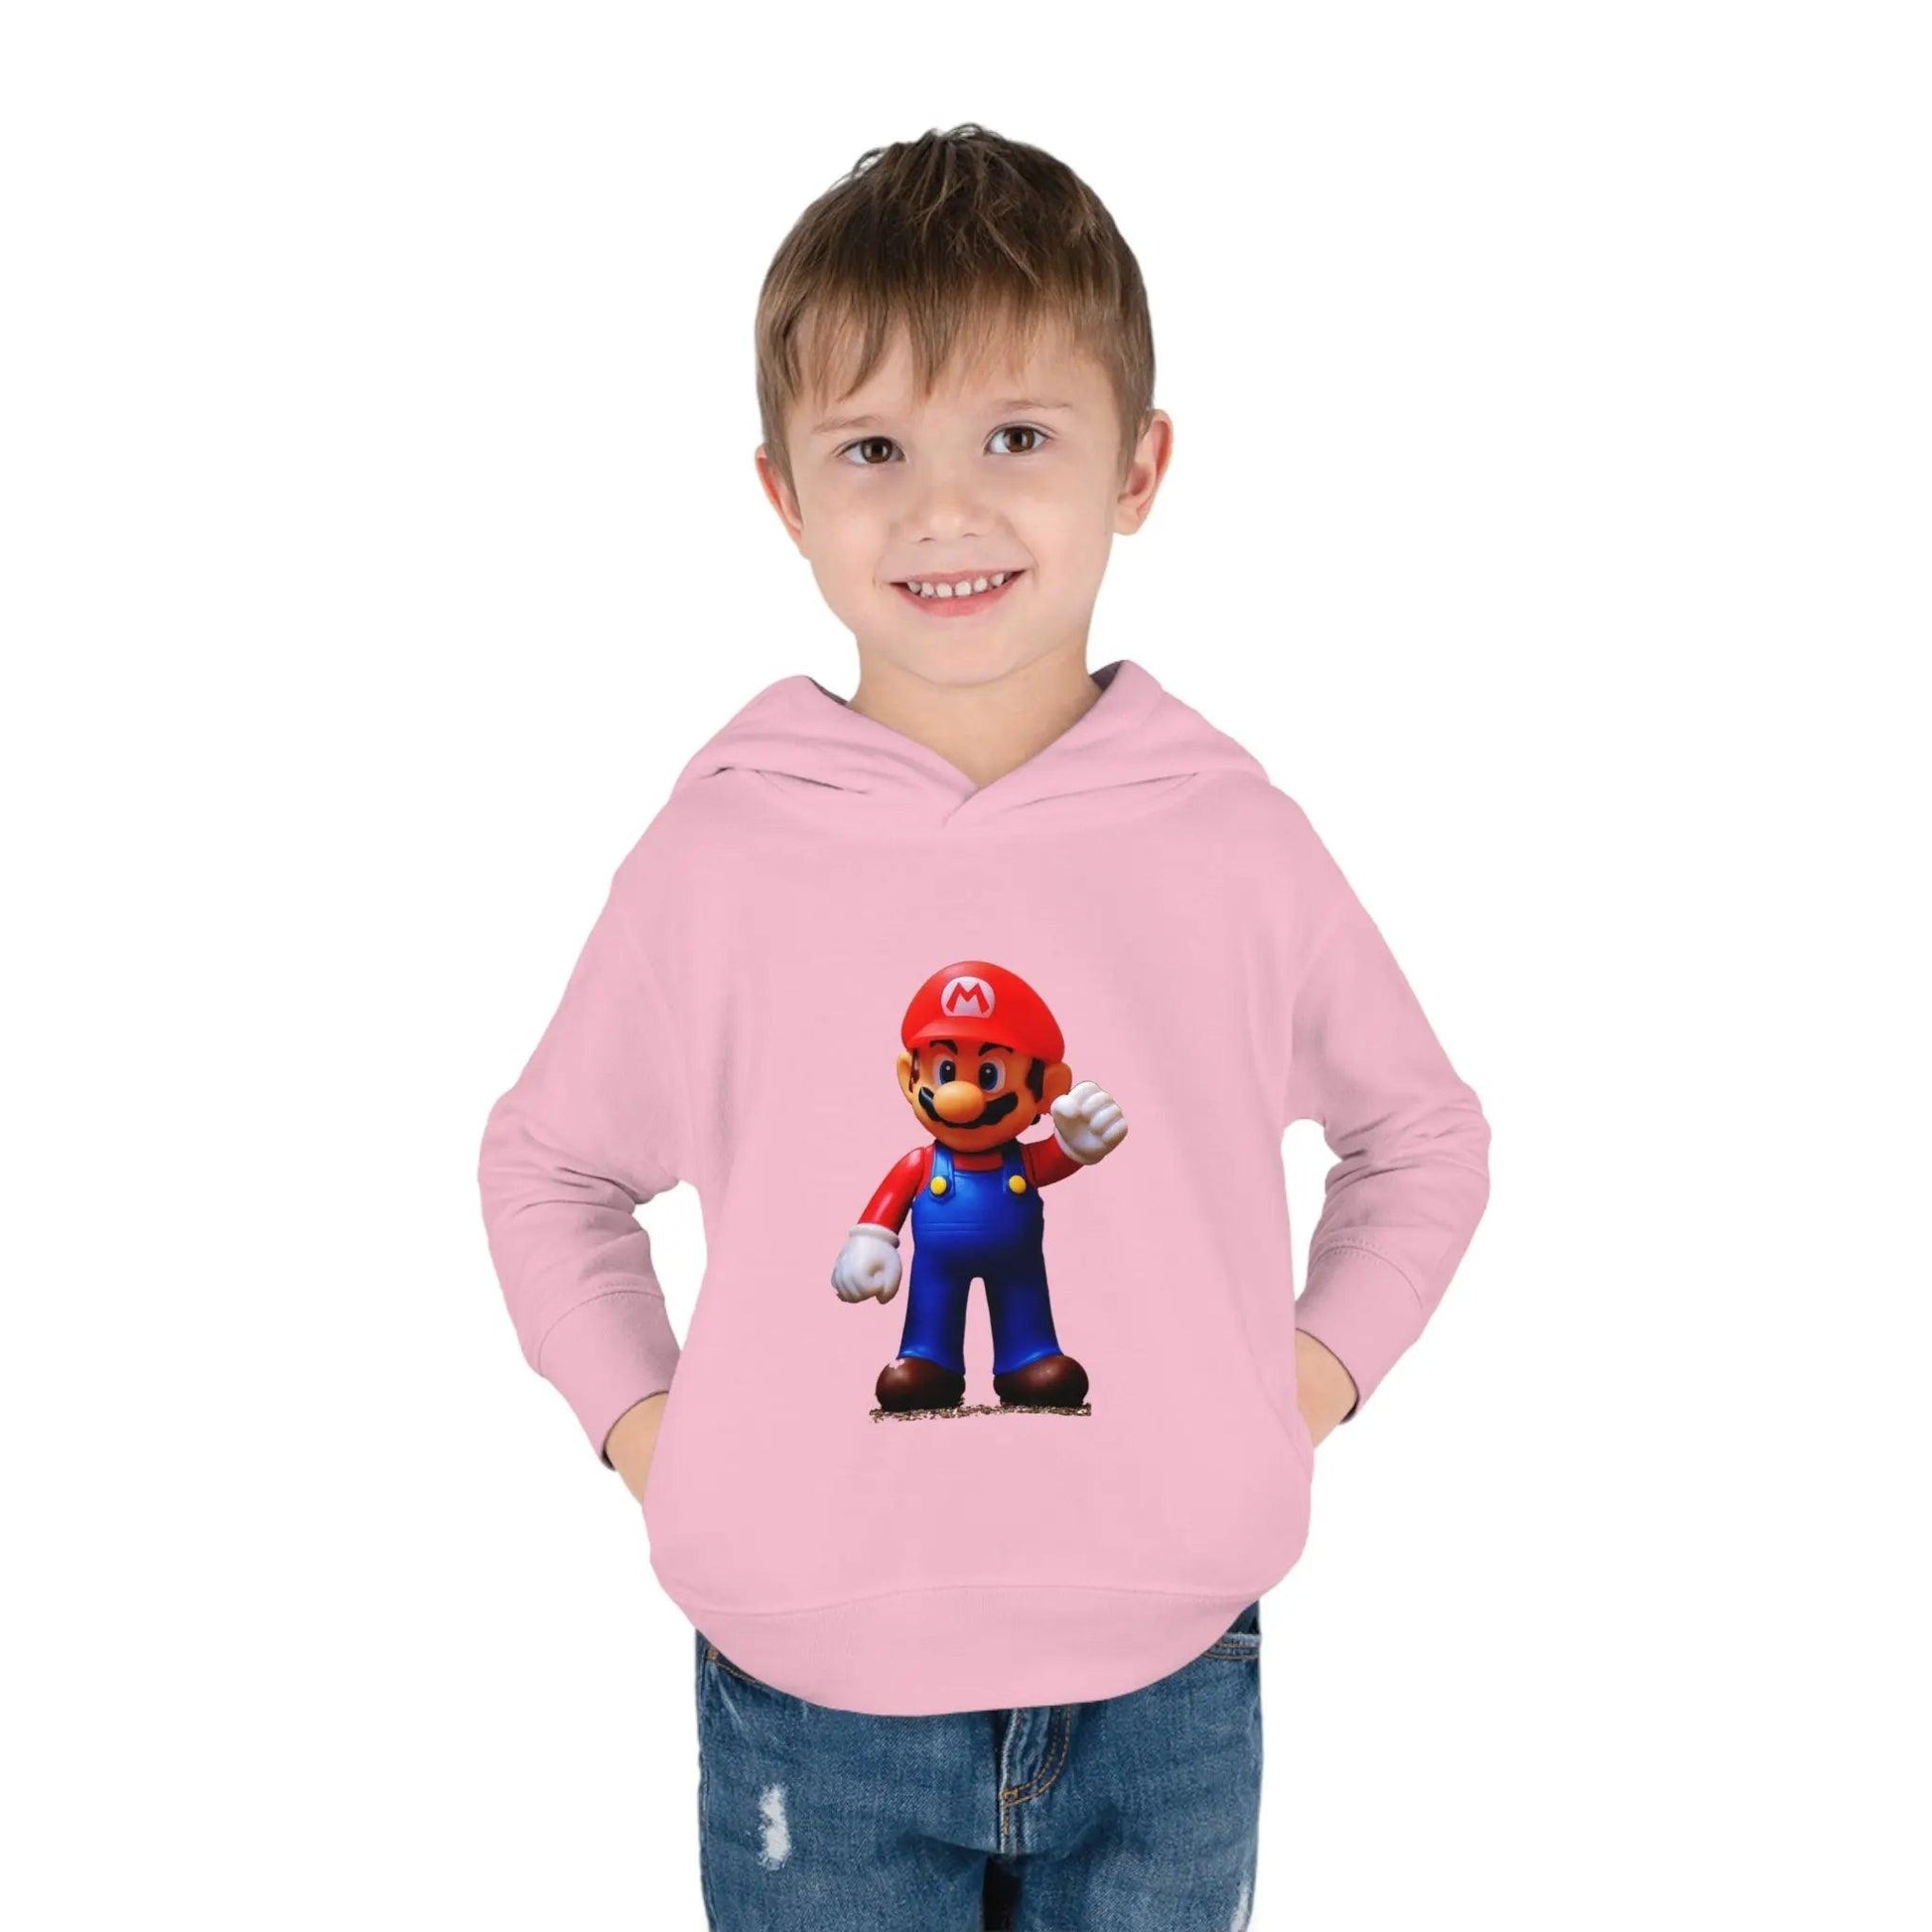 Mario - Toddler Pullover Fleece Hoodie Kids clothes